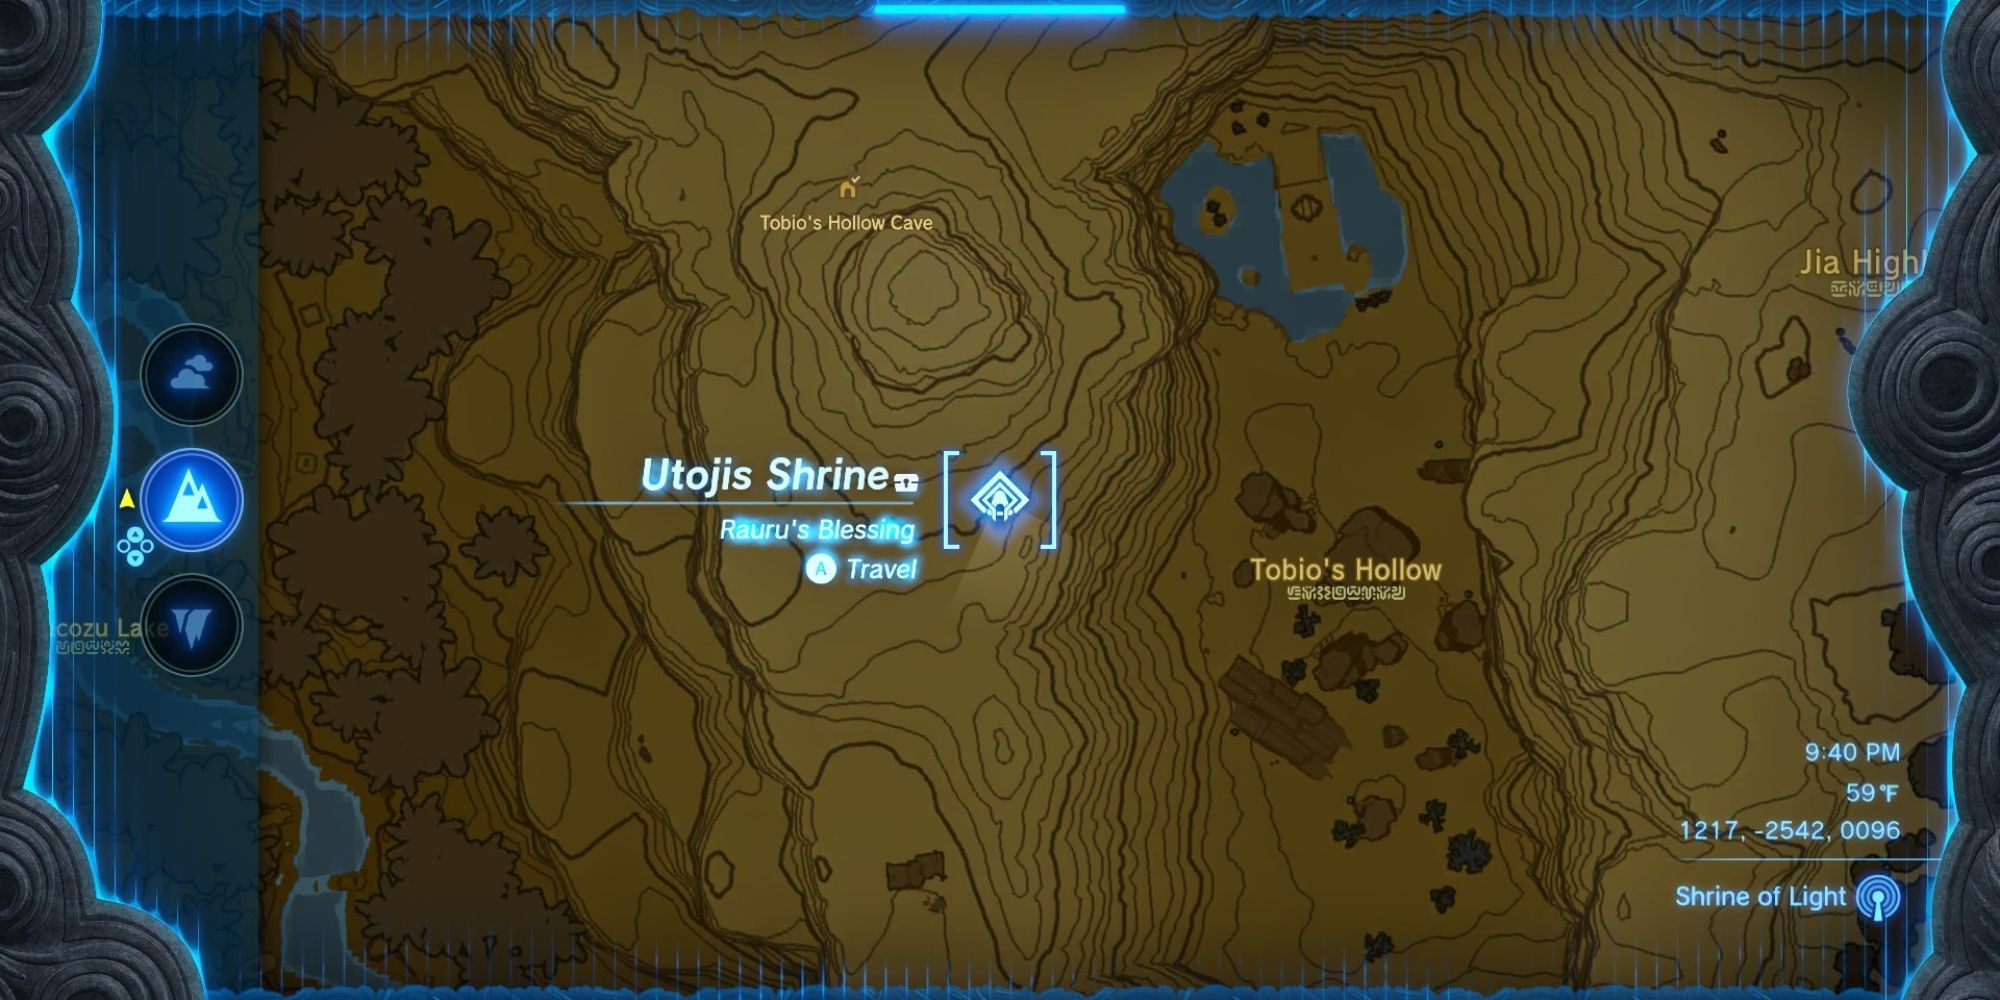 utojis shrine location on map totk